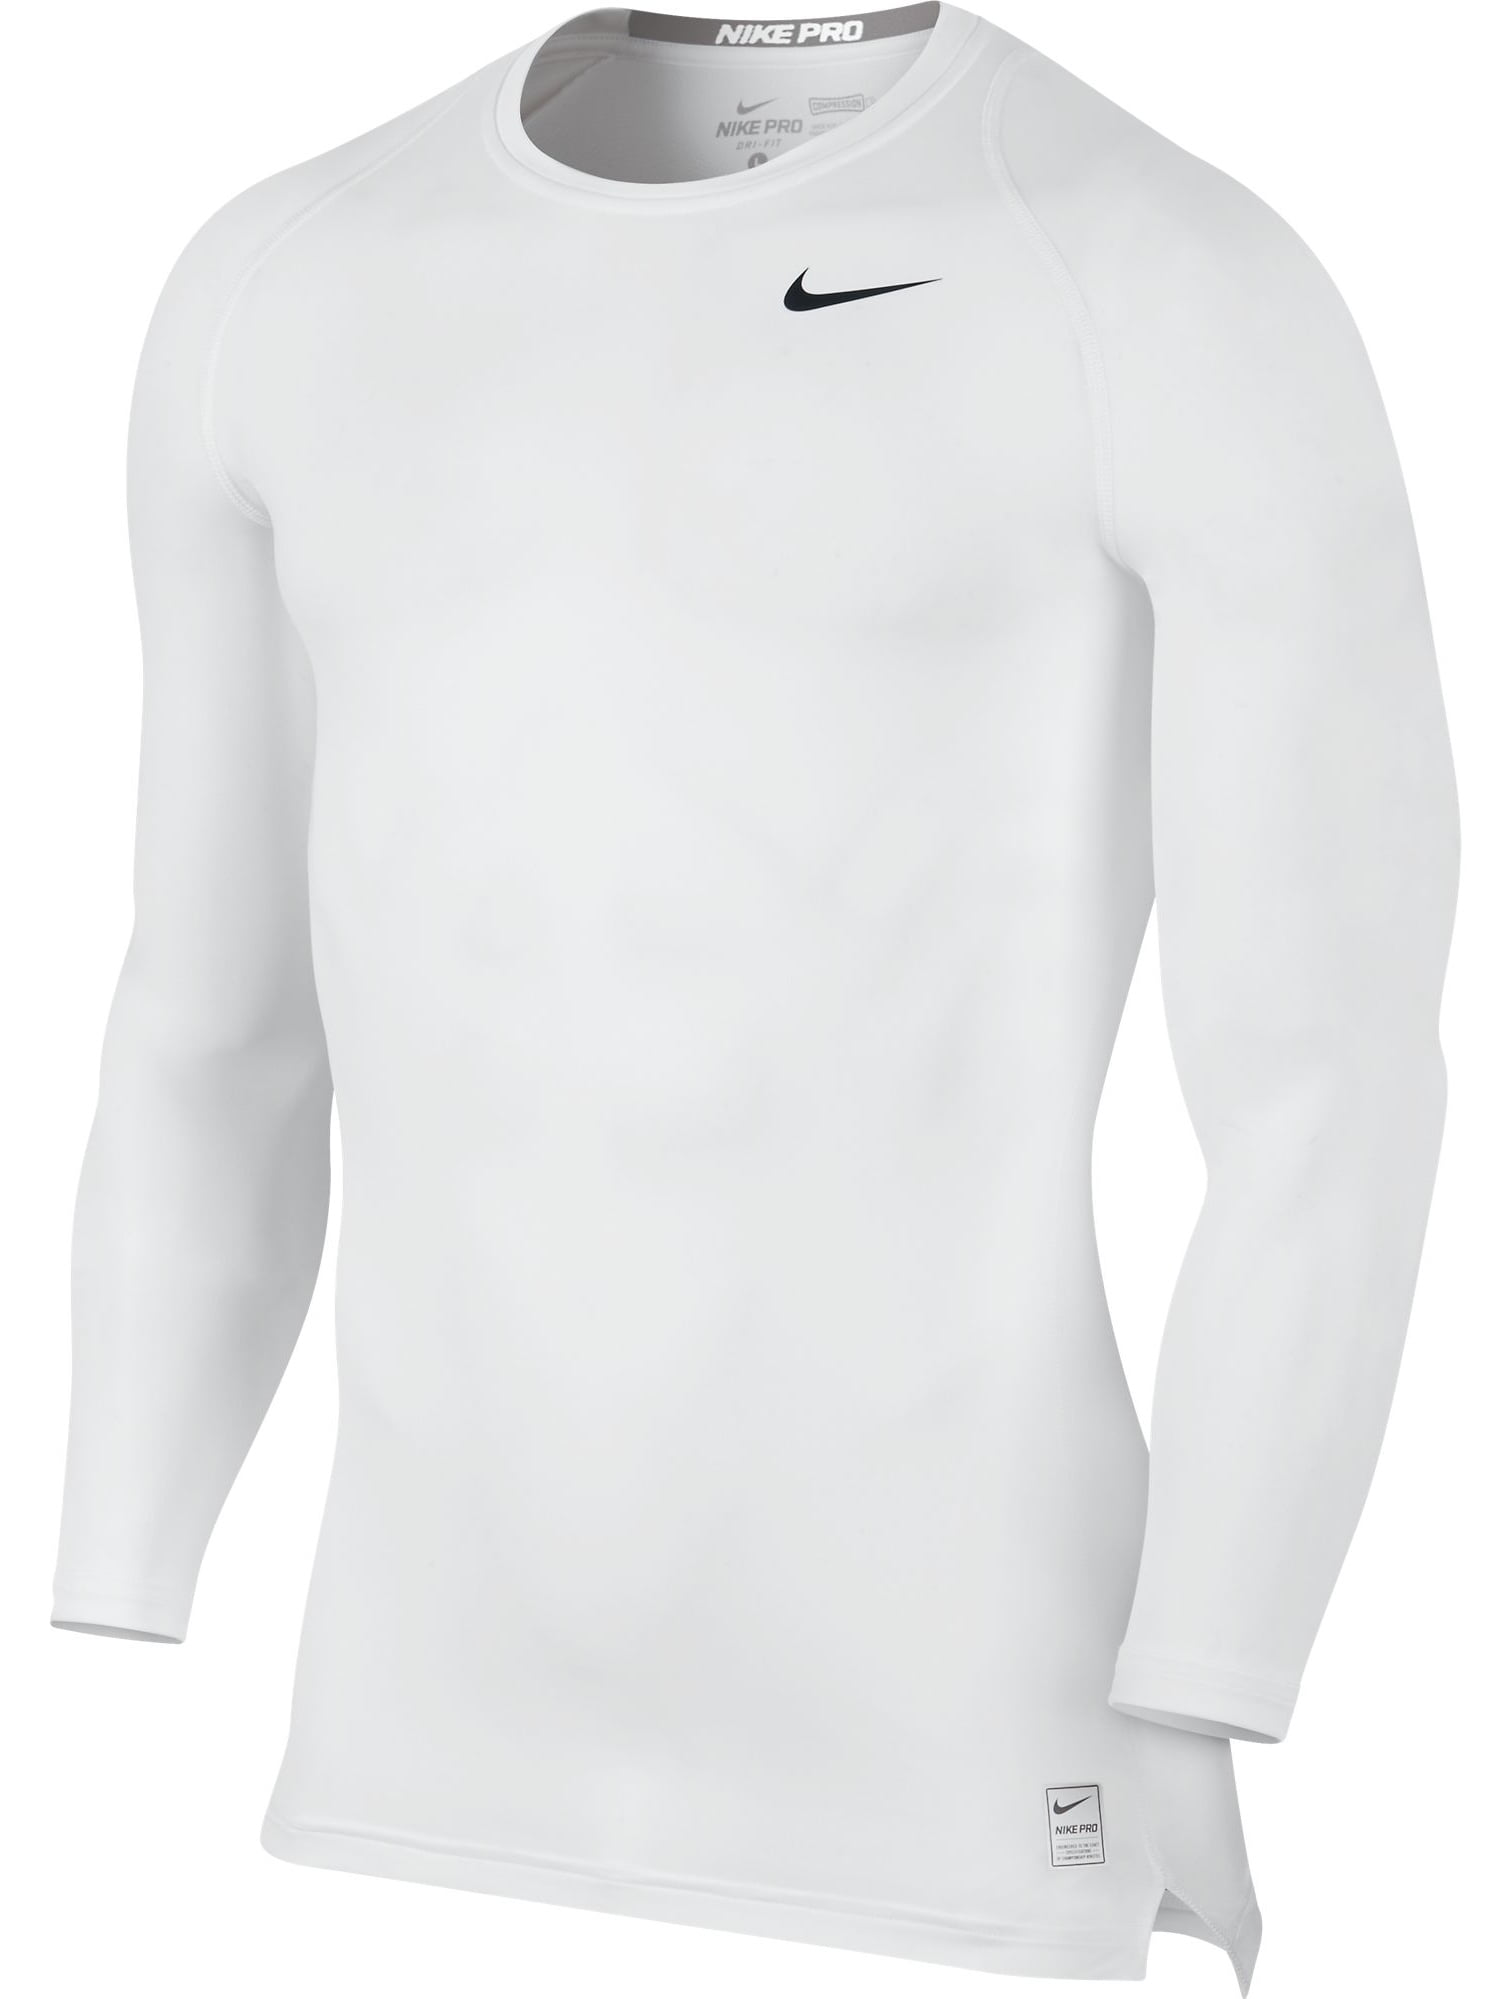 Nike Pro Cool Longsleeve Training Men's T-Shirt White/Black 703088-100 